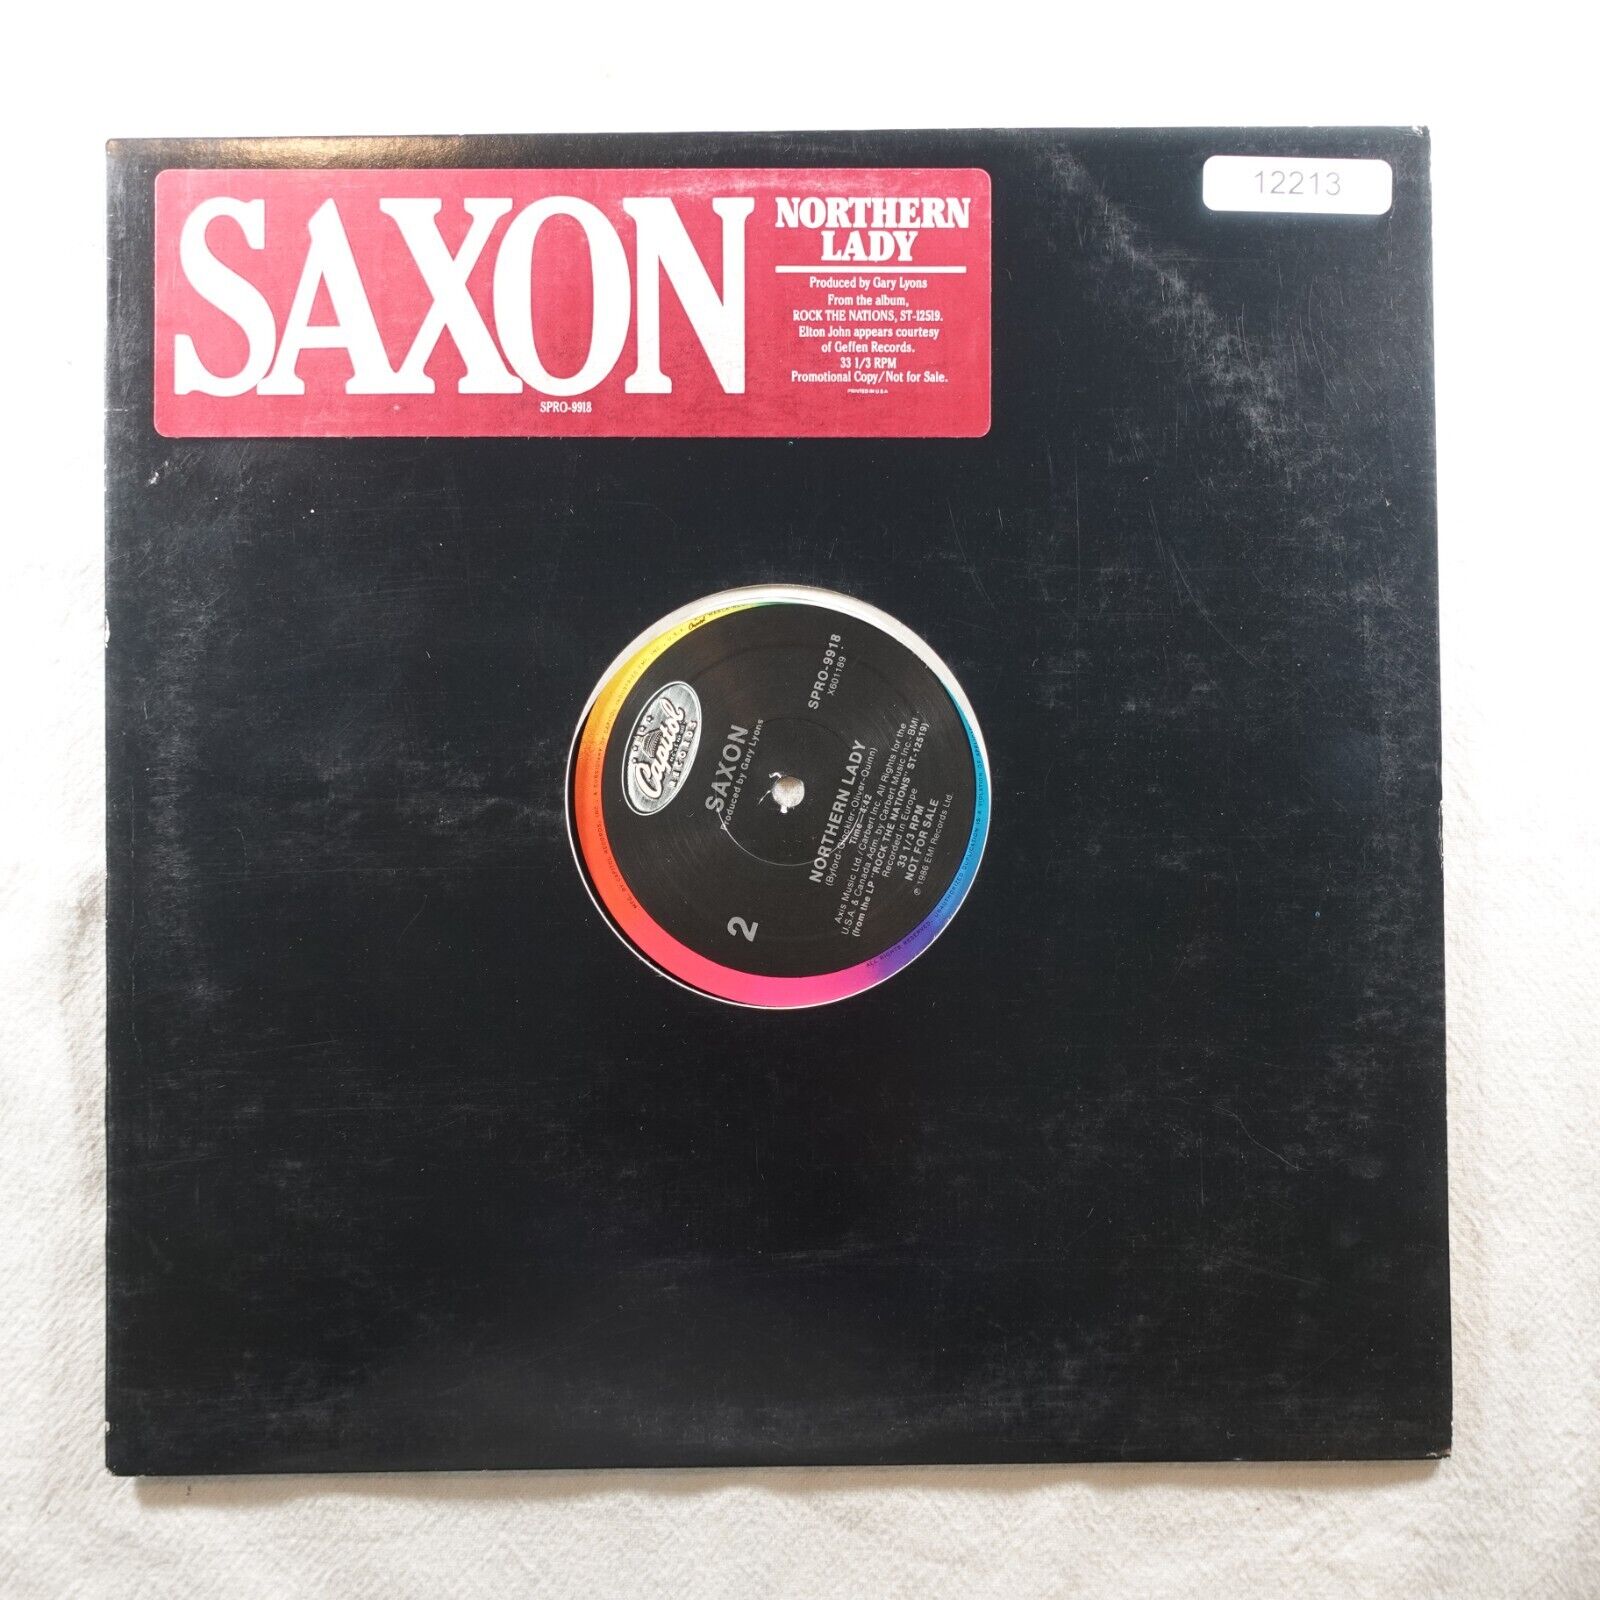 Saxon Northern Lady   Record Album Vinyl LP